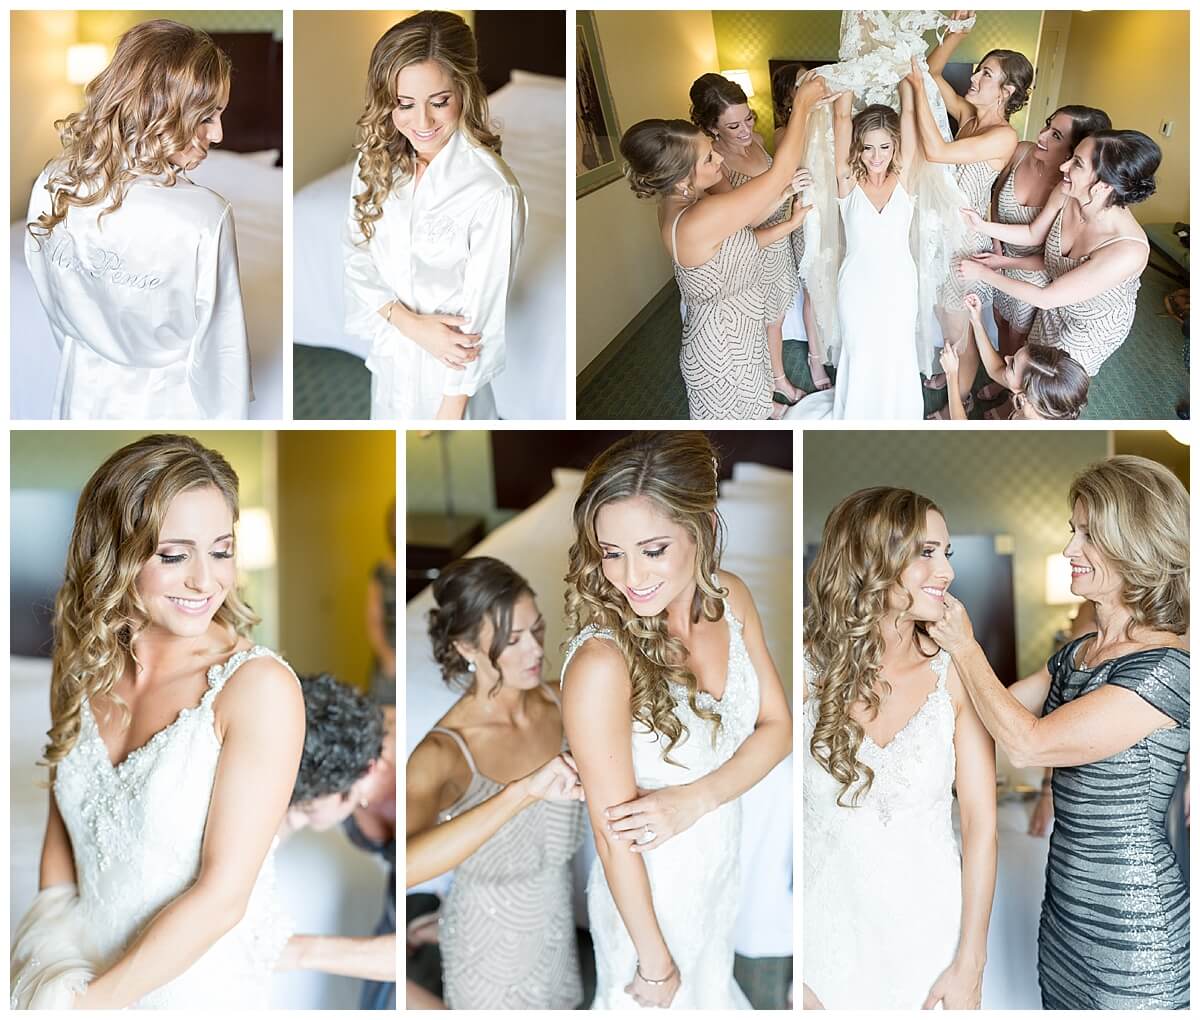 Multiple getting ready photos from Allyssa's wedding in Oakley